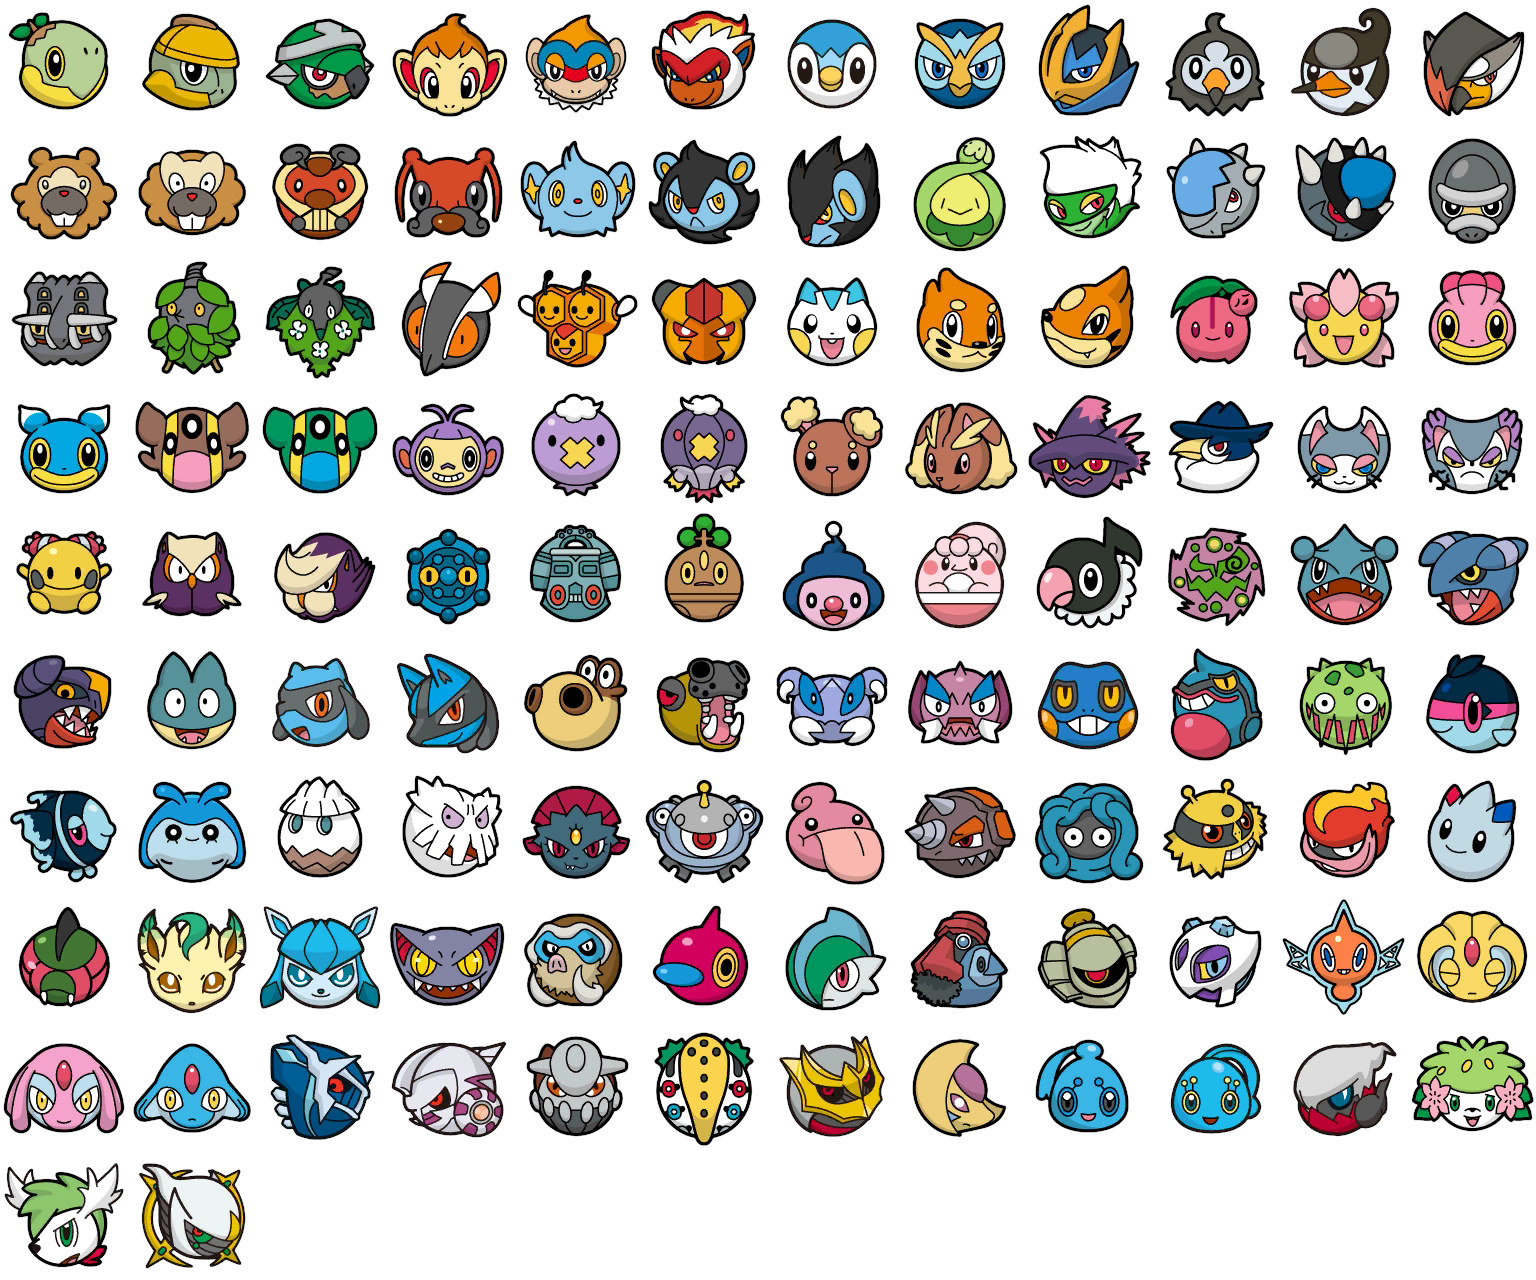 Pokémon Battle Trozei! / Pokémon Link: Battle! - Pokémon (4th Generation)